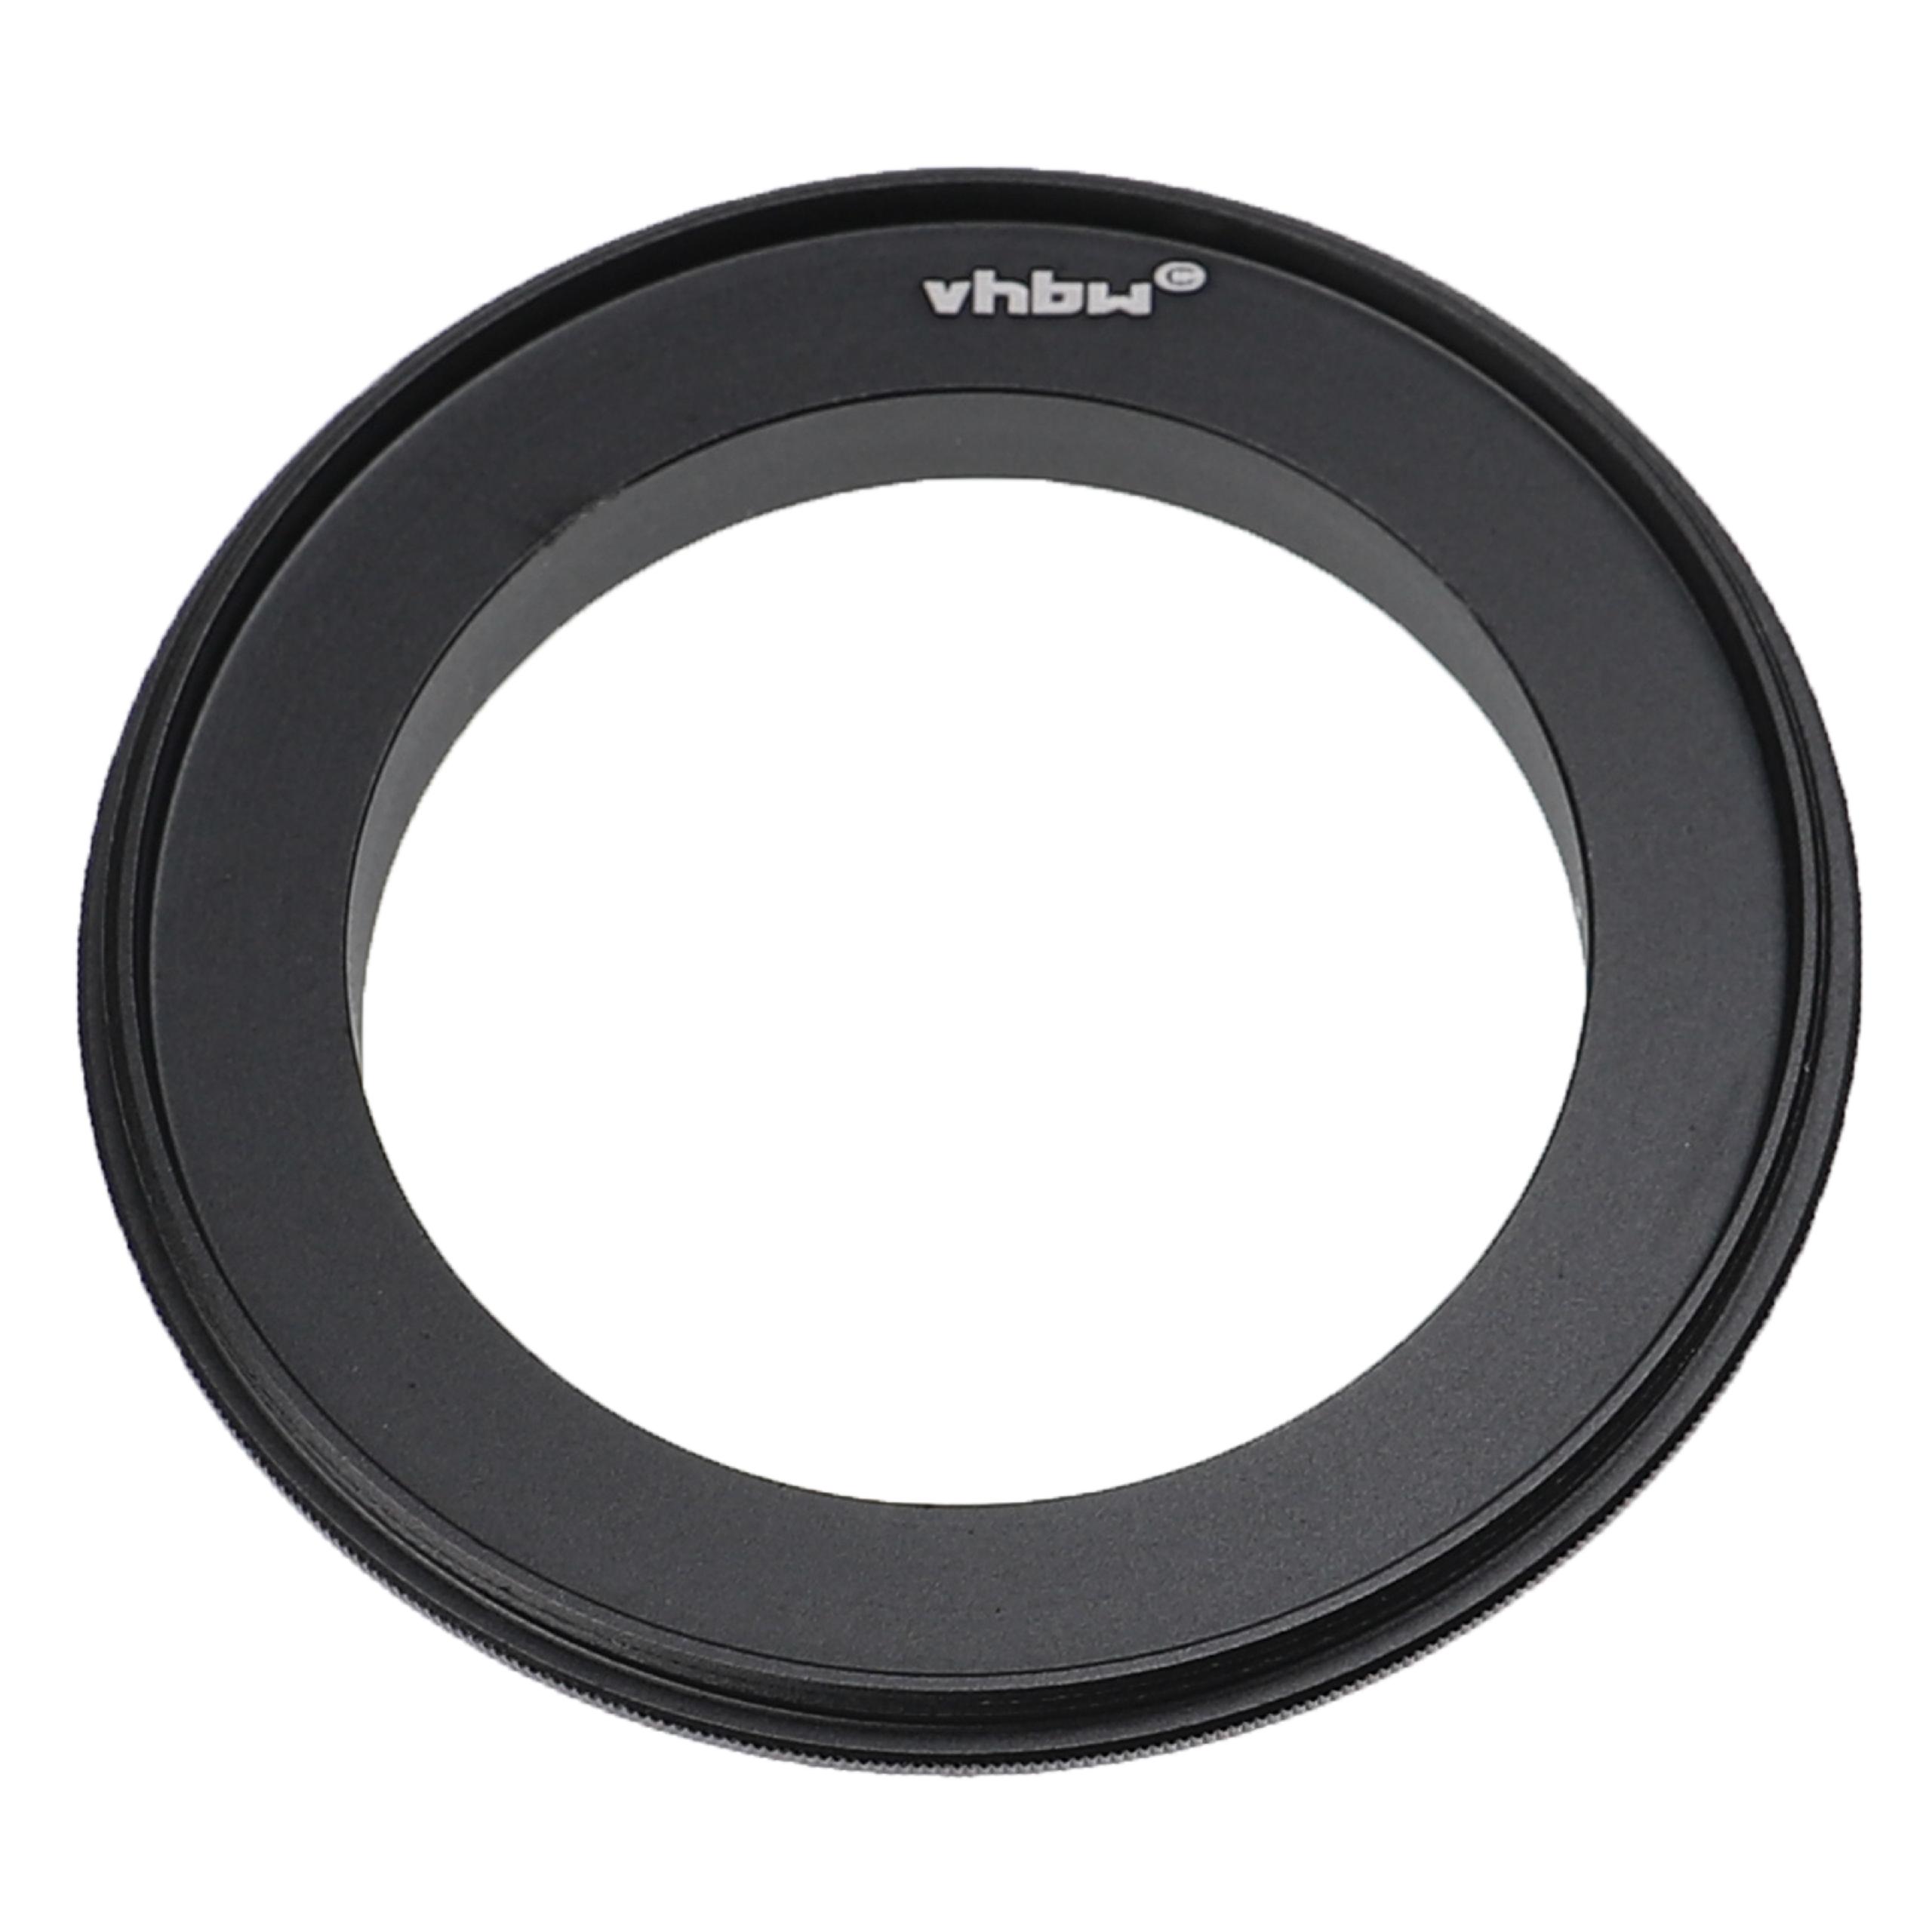 67 mm Retro Adapter suitable for Canon EOS R, RP, RFCameras & Lenses - Retro Ring